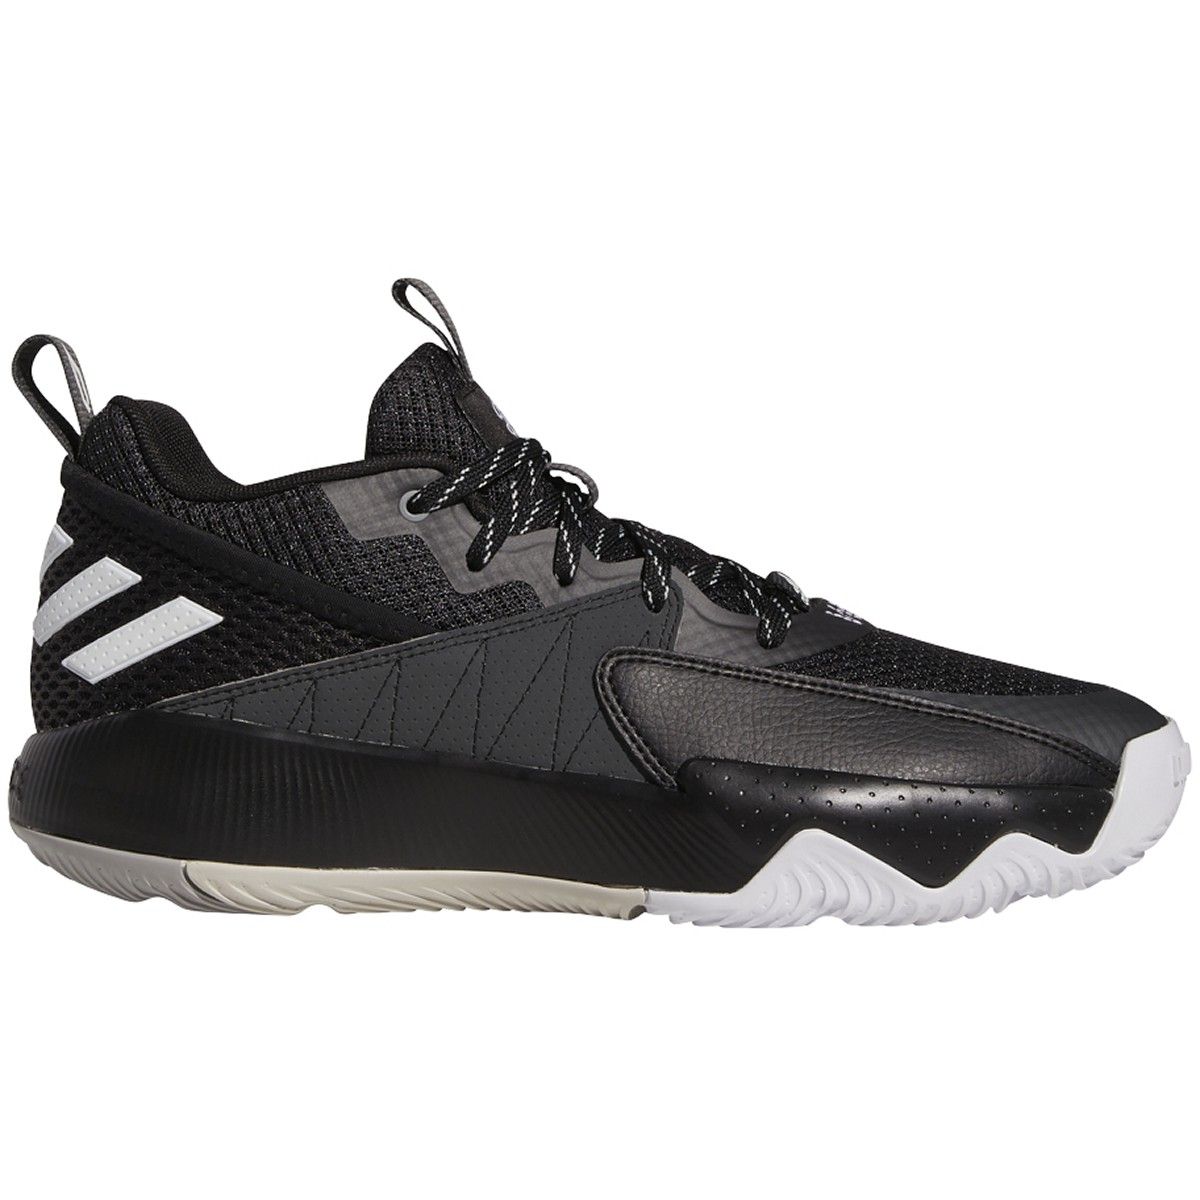 adidas Dame Certified Extply  - Mens Damian Lillard Basketball Shoes |  GY2439